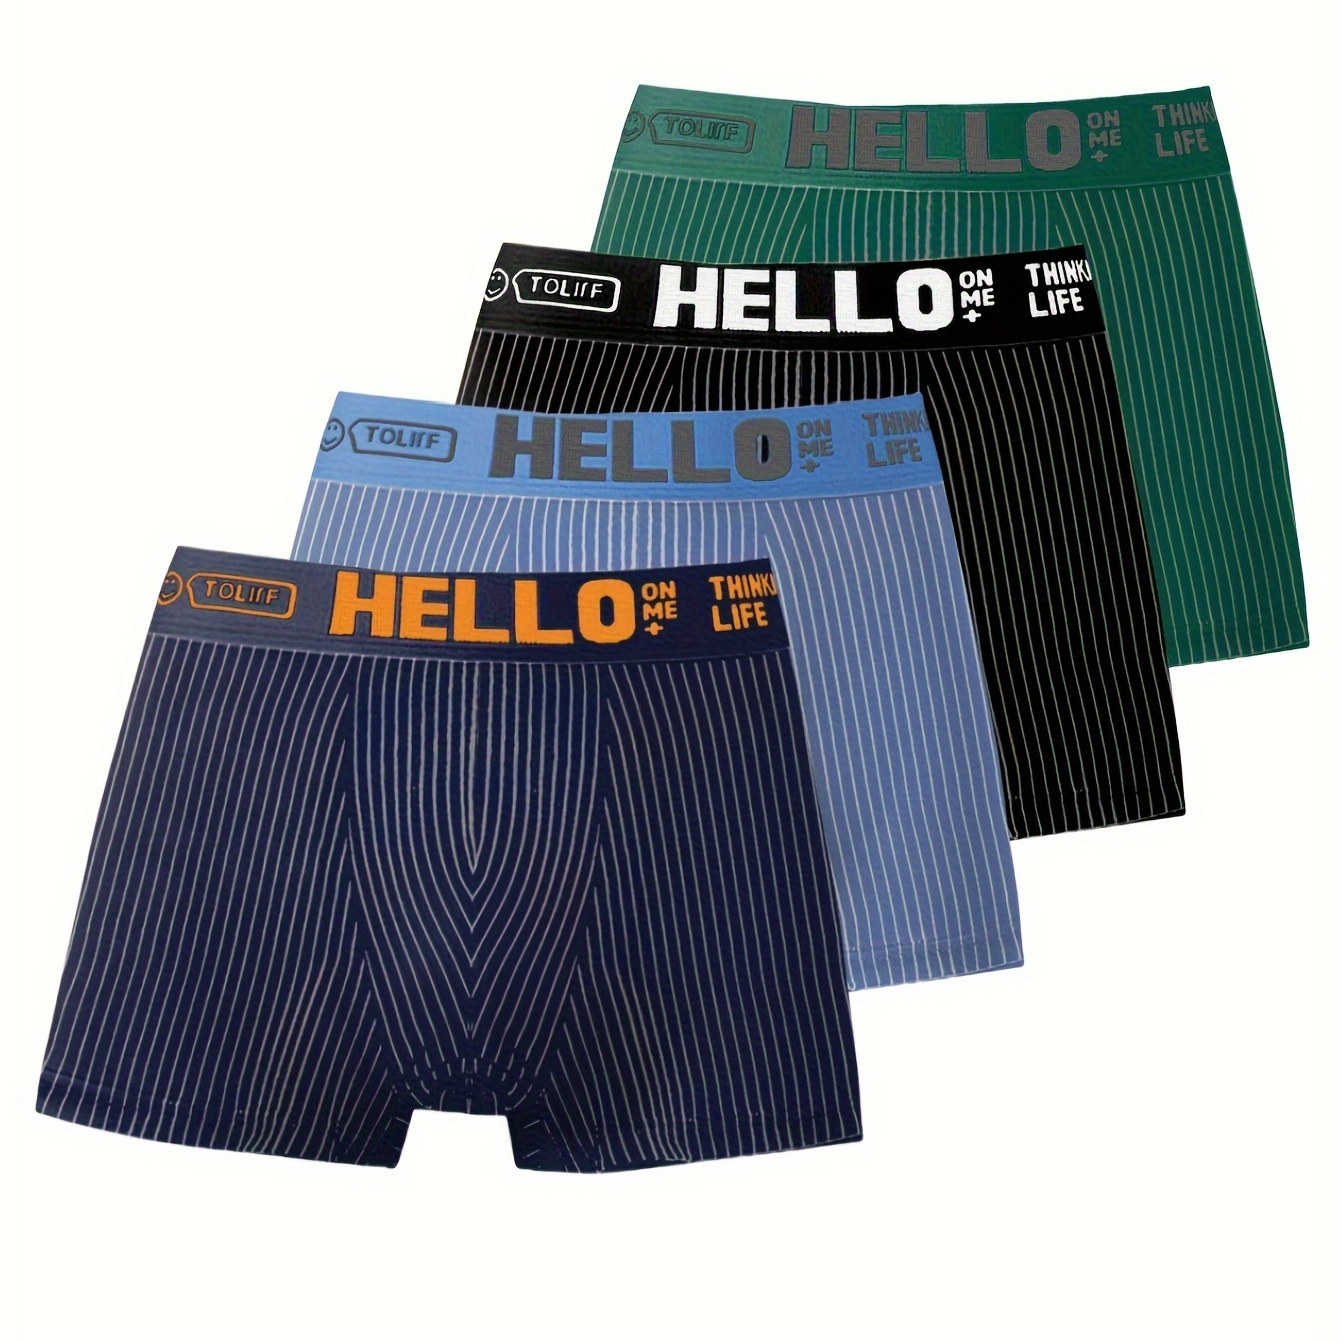 

4pcs Hello Men's Stiped Cotton Boxer Briefs, Breathable Comfy Boxer Trunks, Elastic Sports Shorts, Men's Casual & Durable Underwear Daily Wear